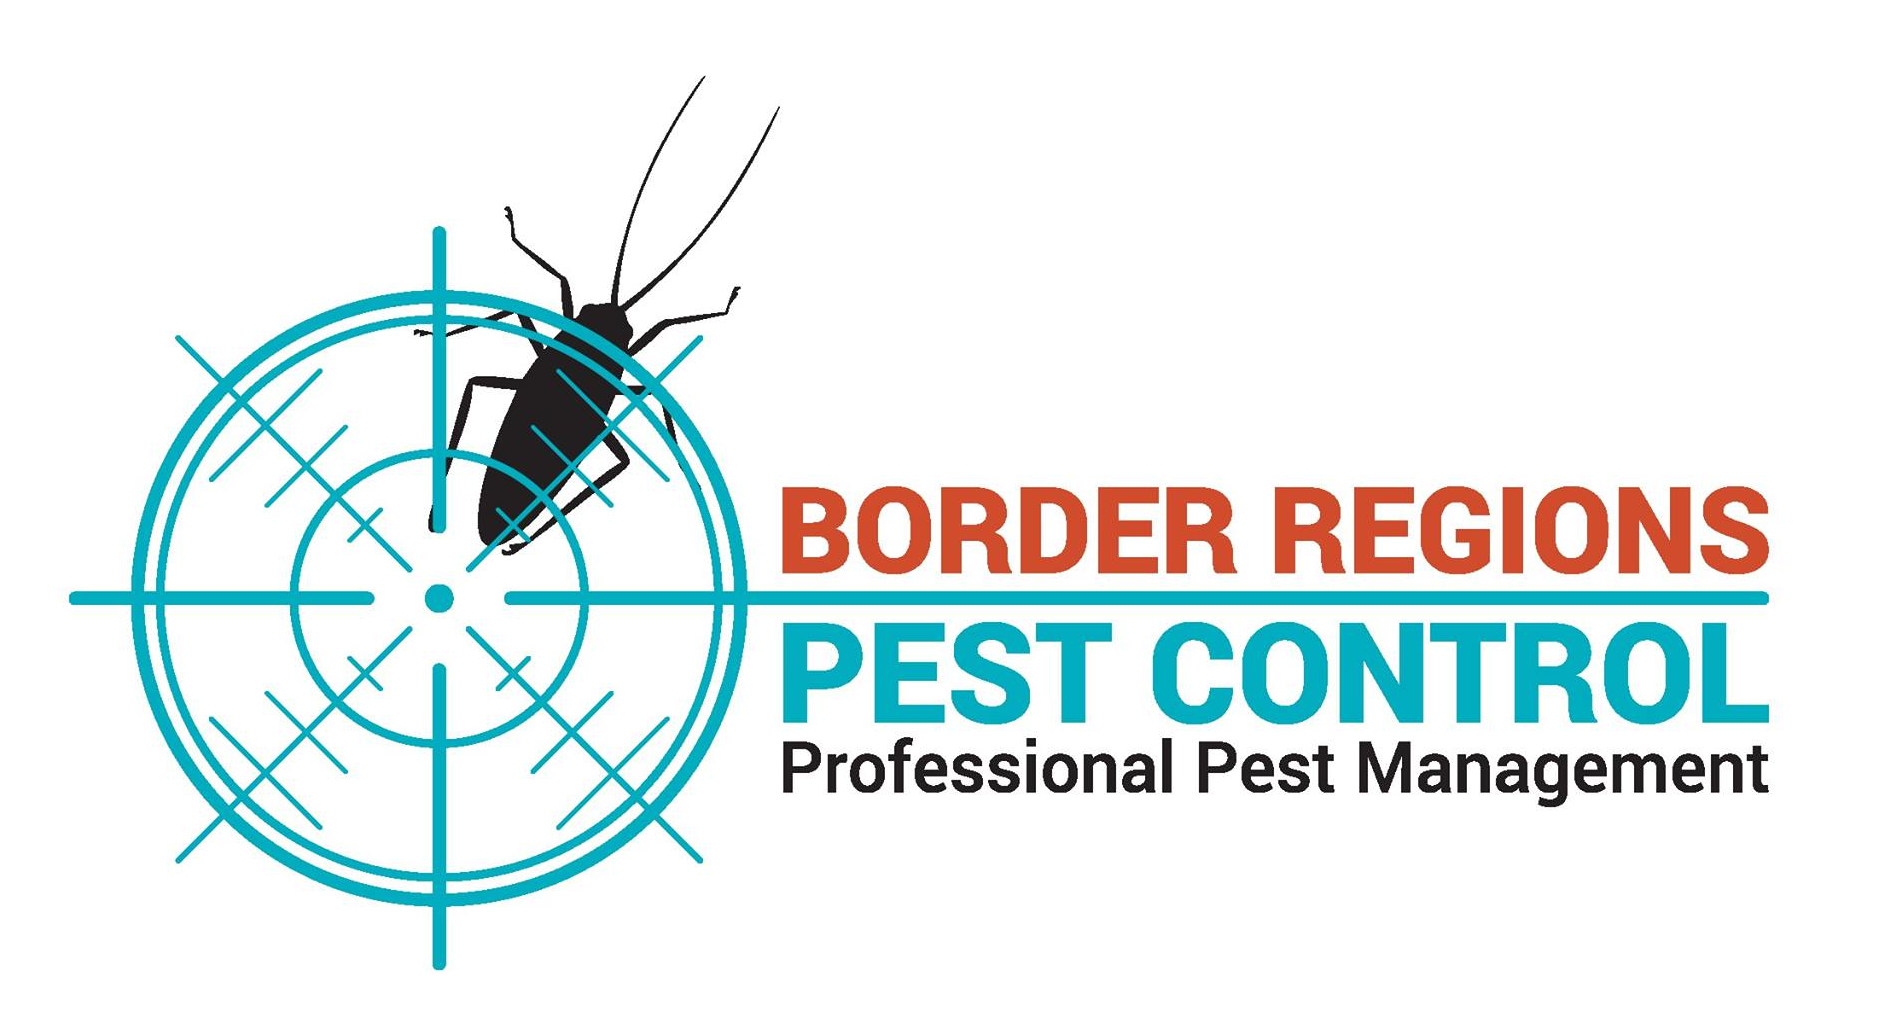 Border Regions Pest Control